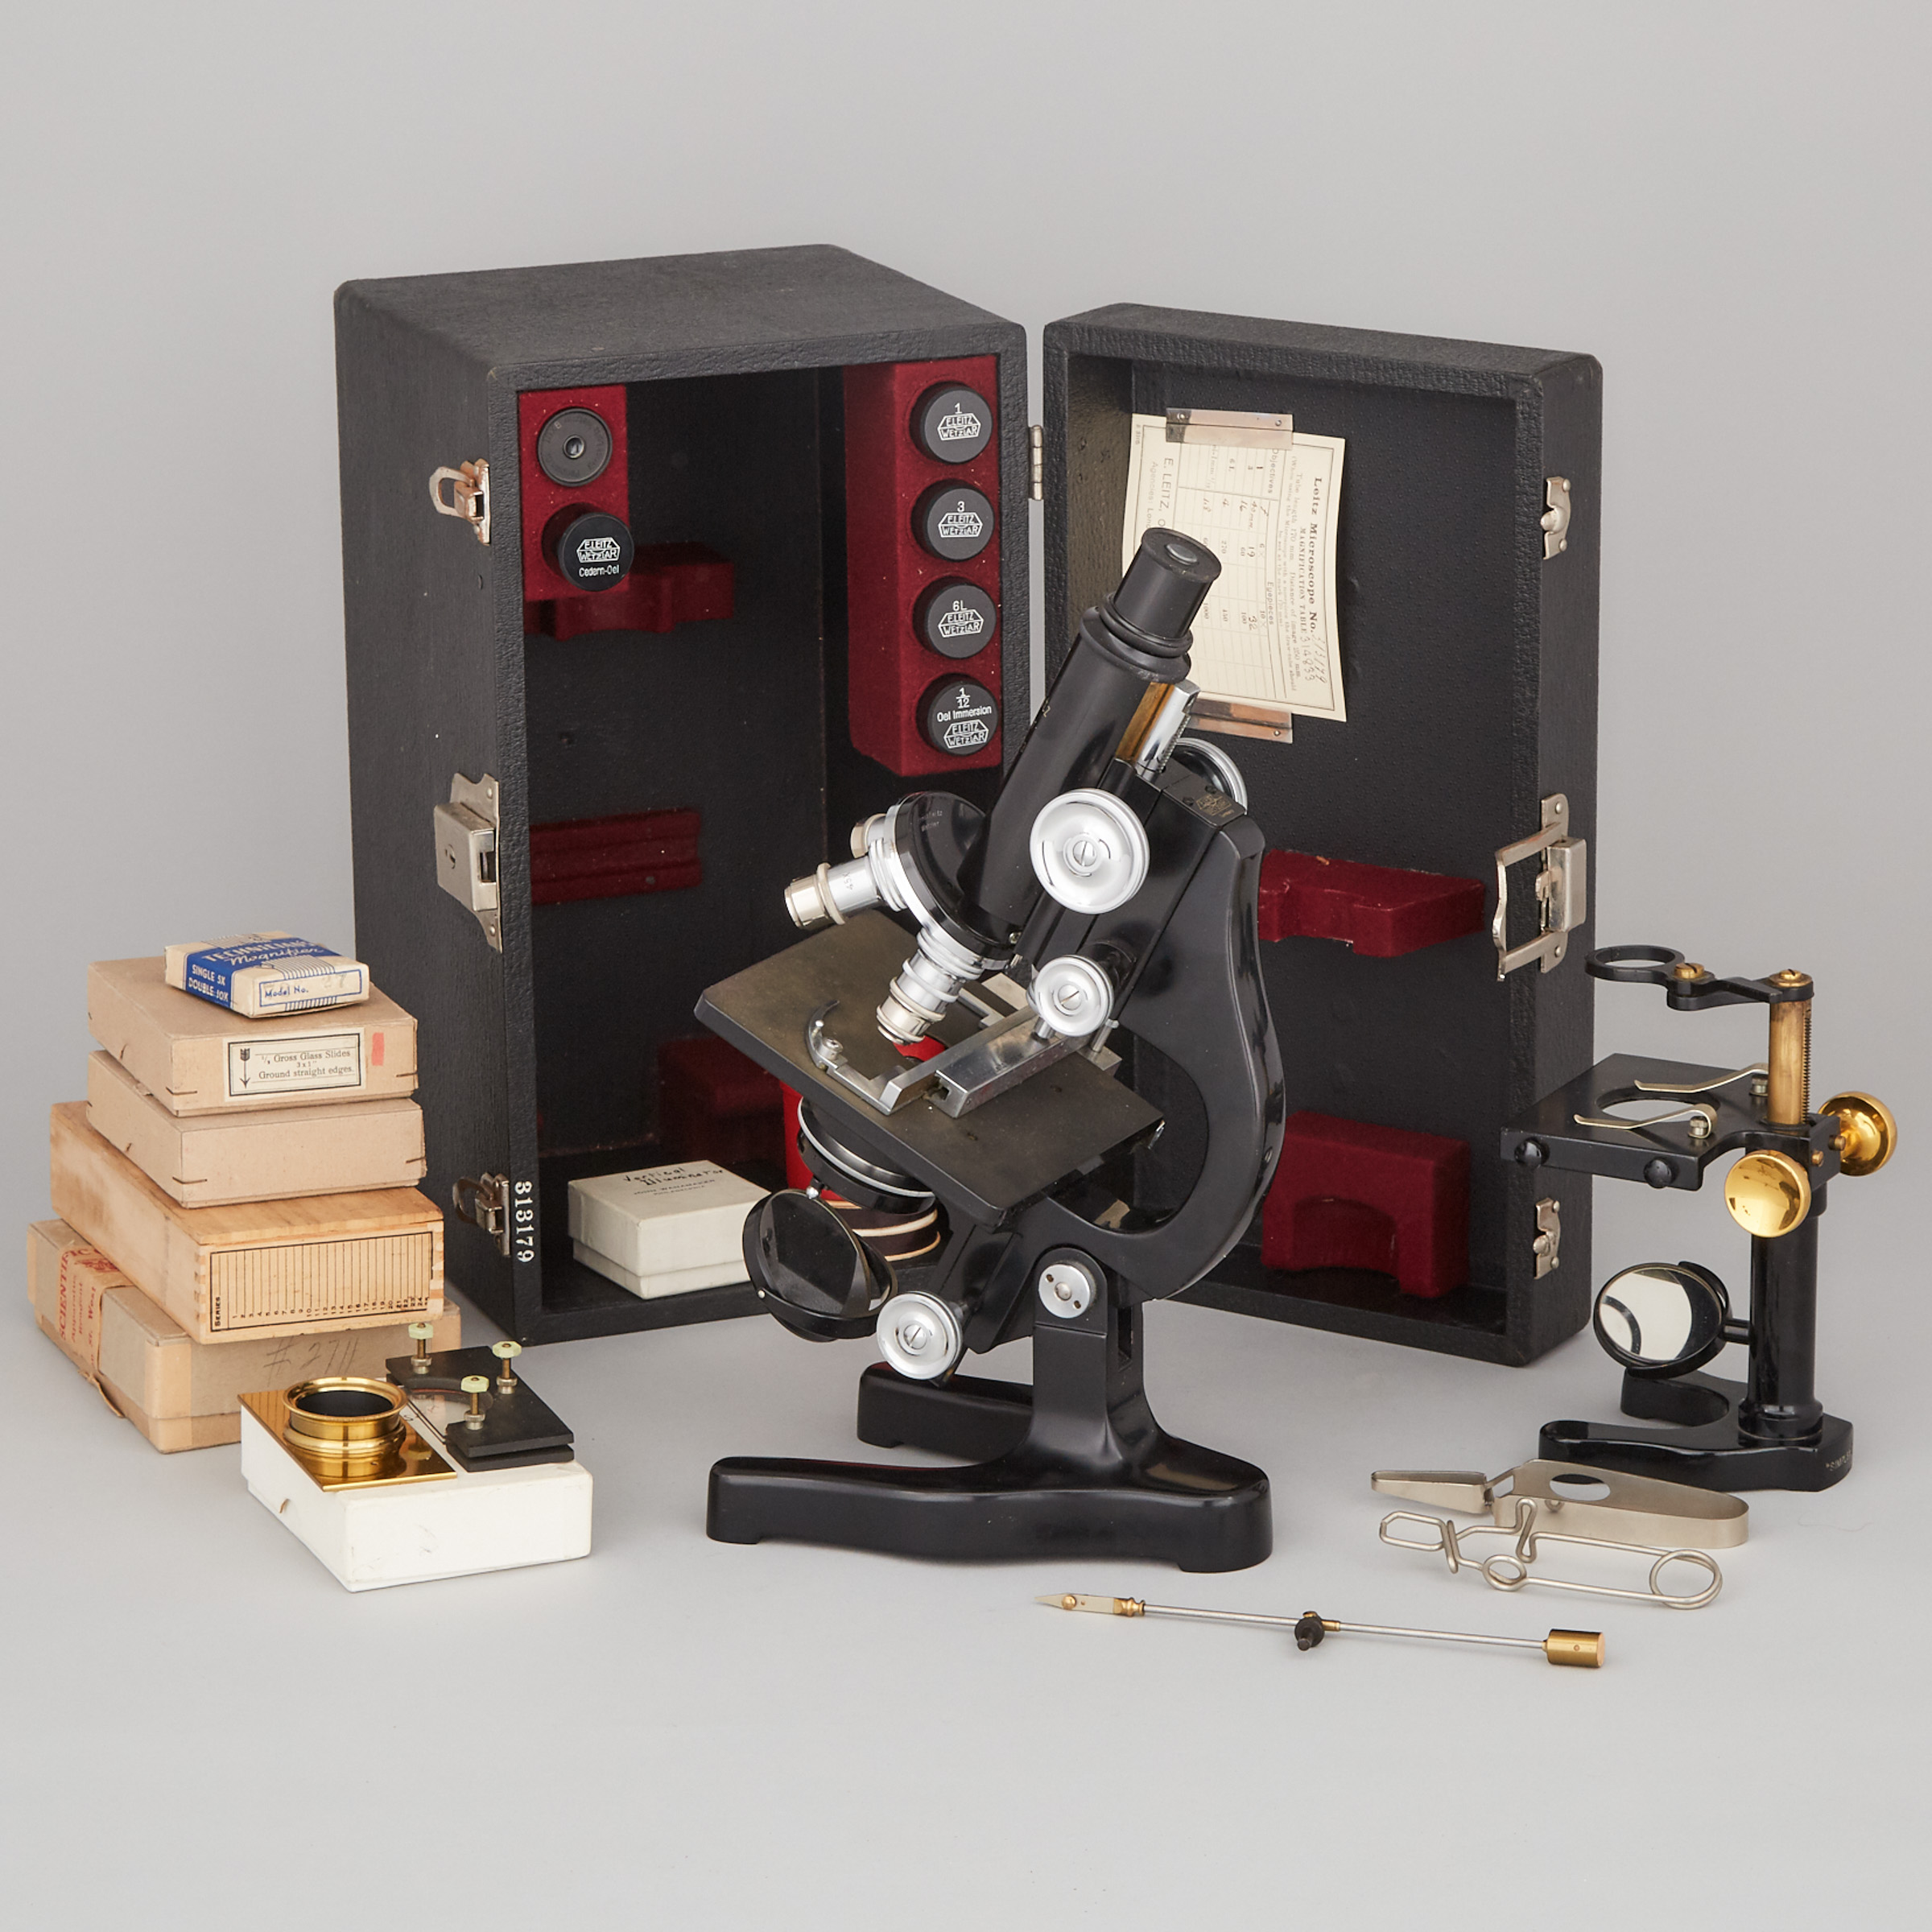 Leitz Wetzlar Compound Microscope, c.1935